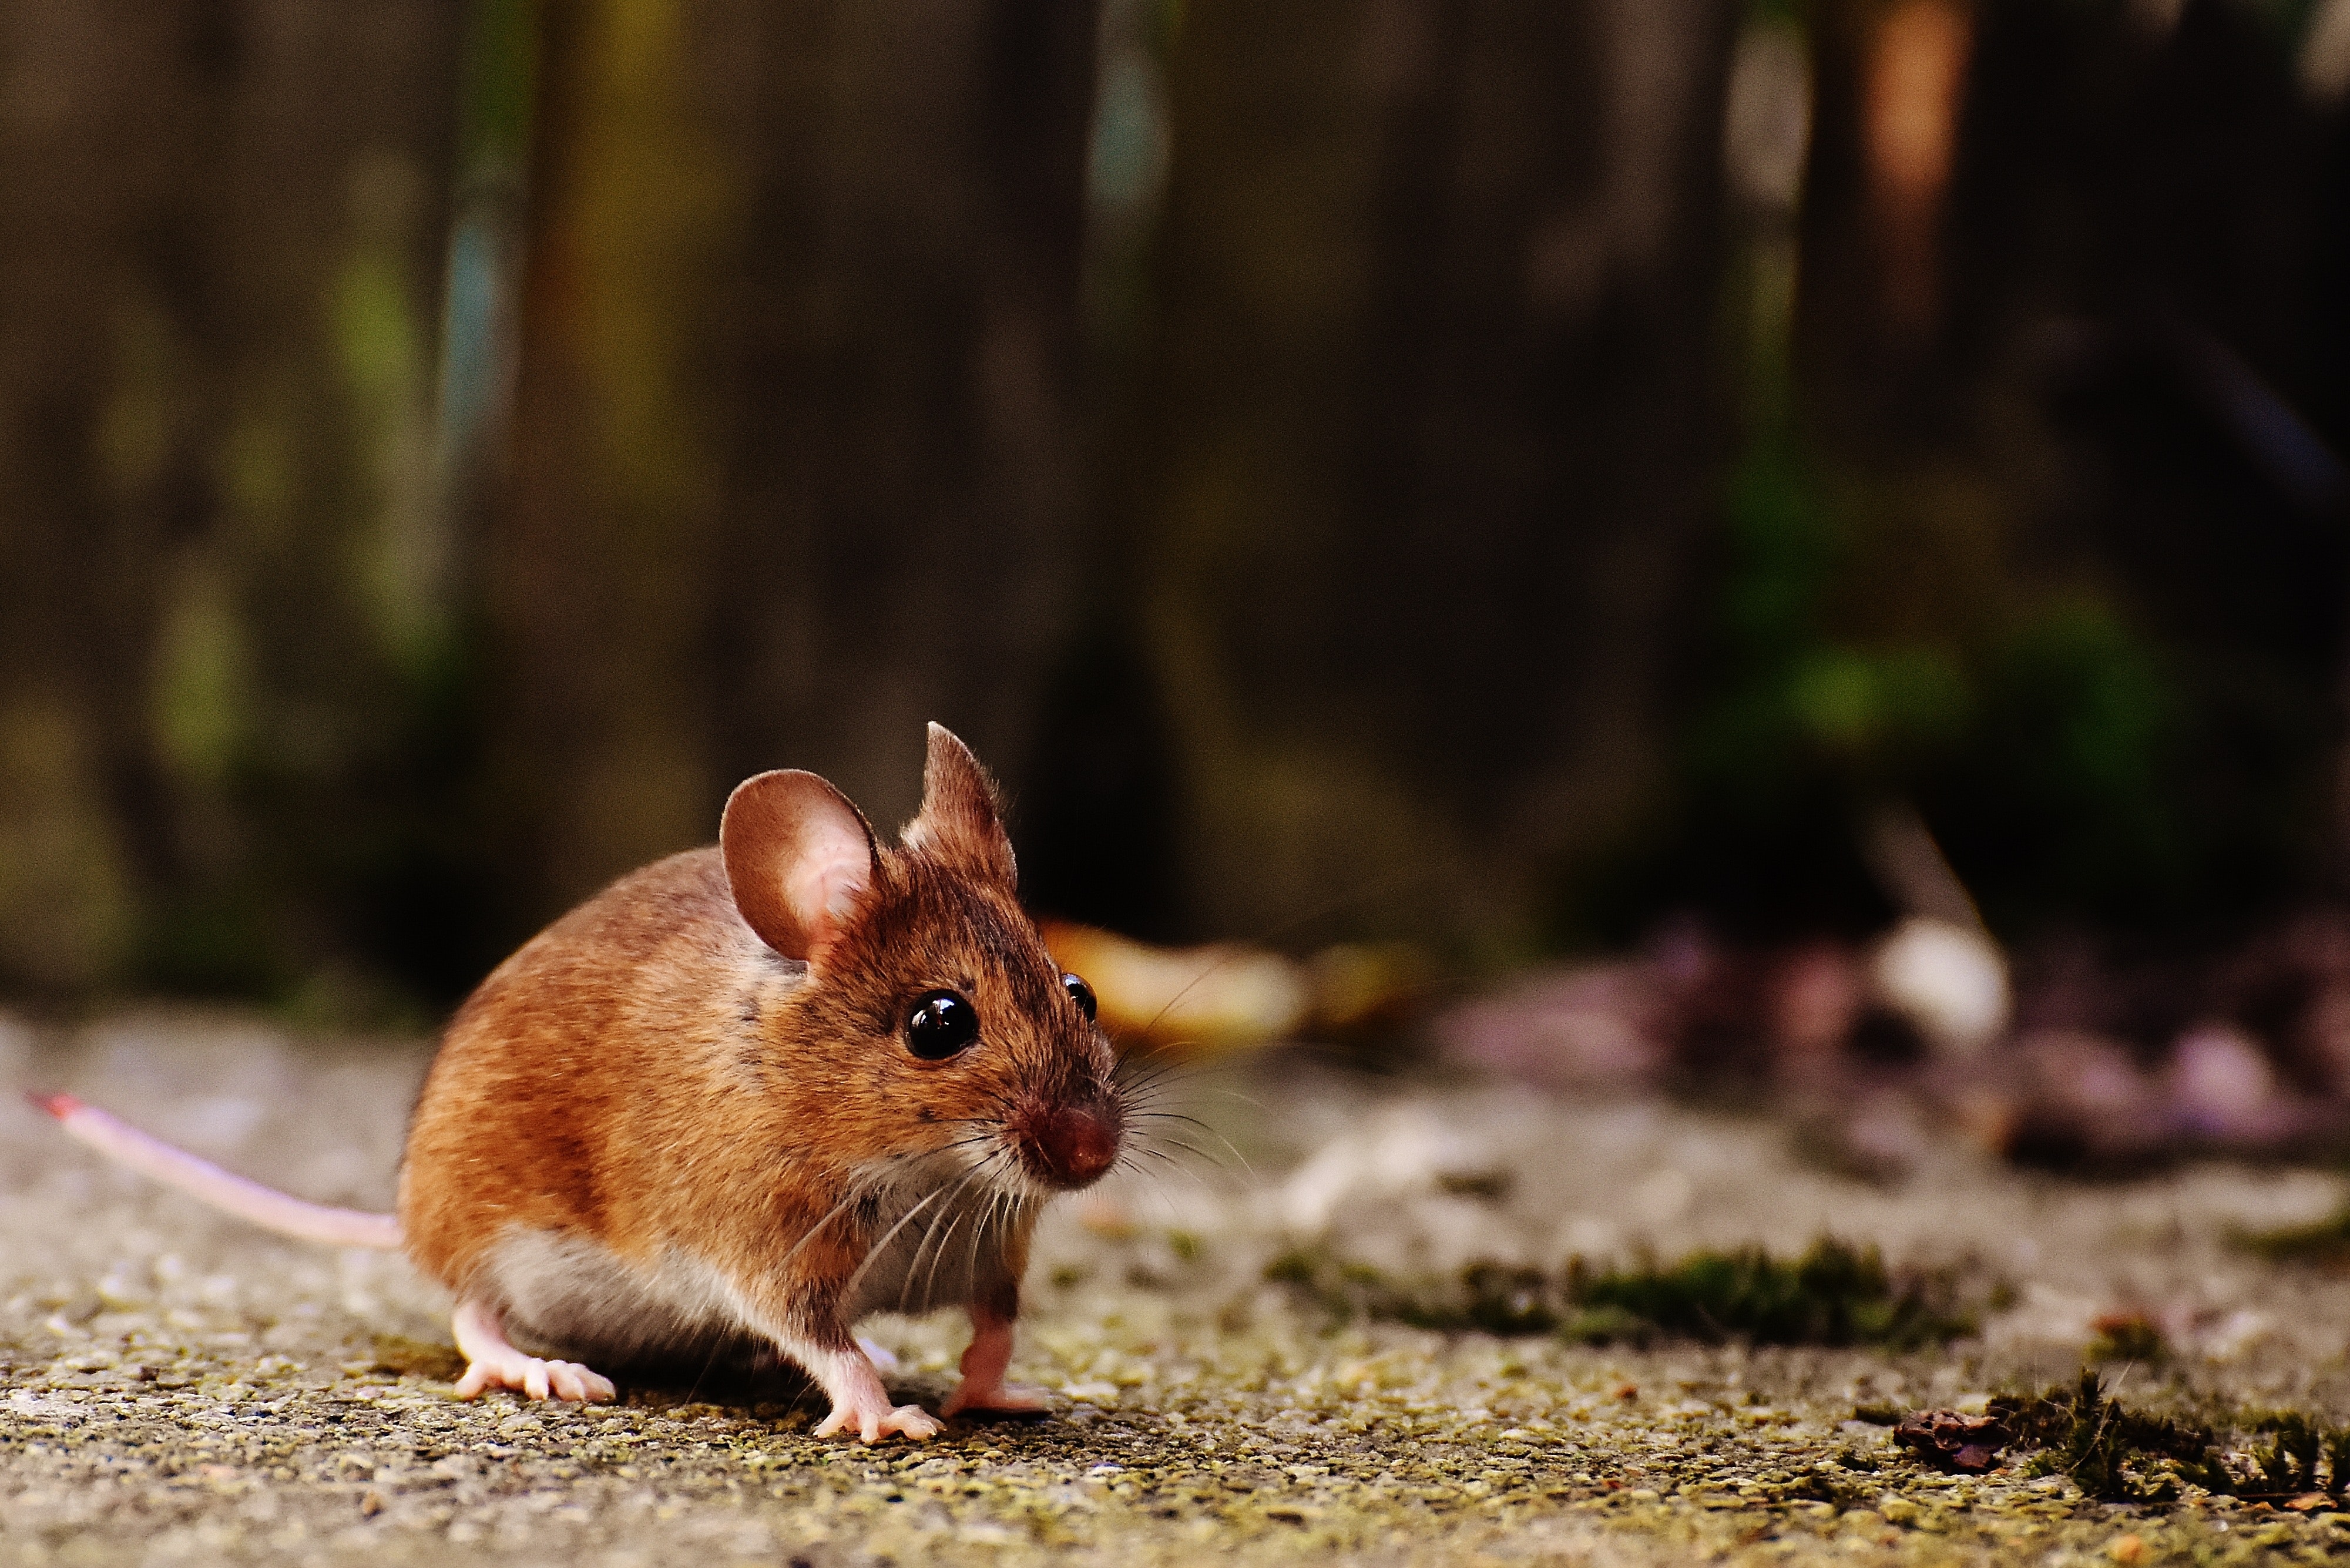 Veneno caseiro para ratos: Como acabar com roedores